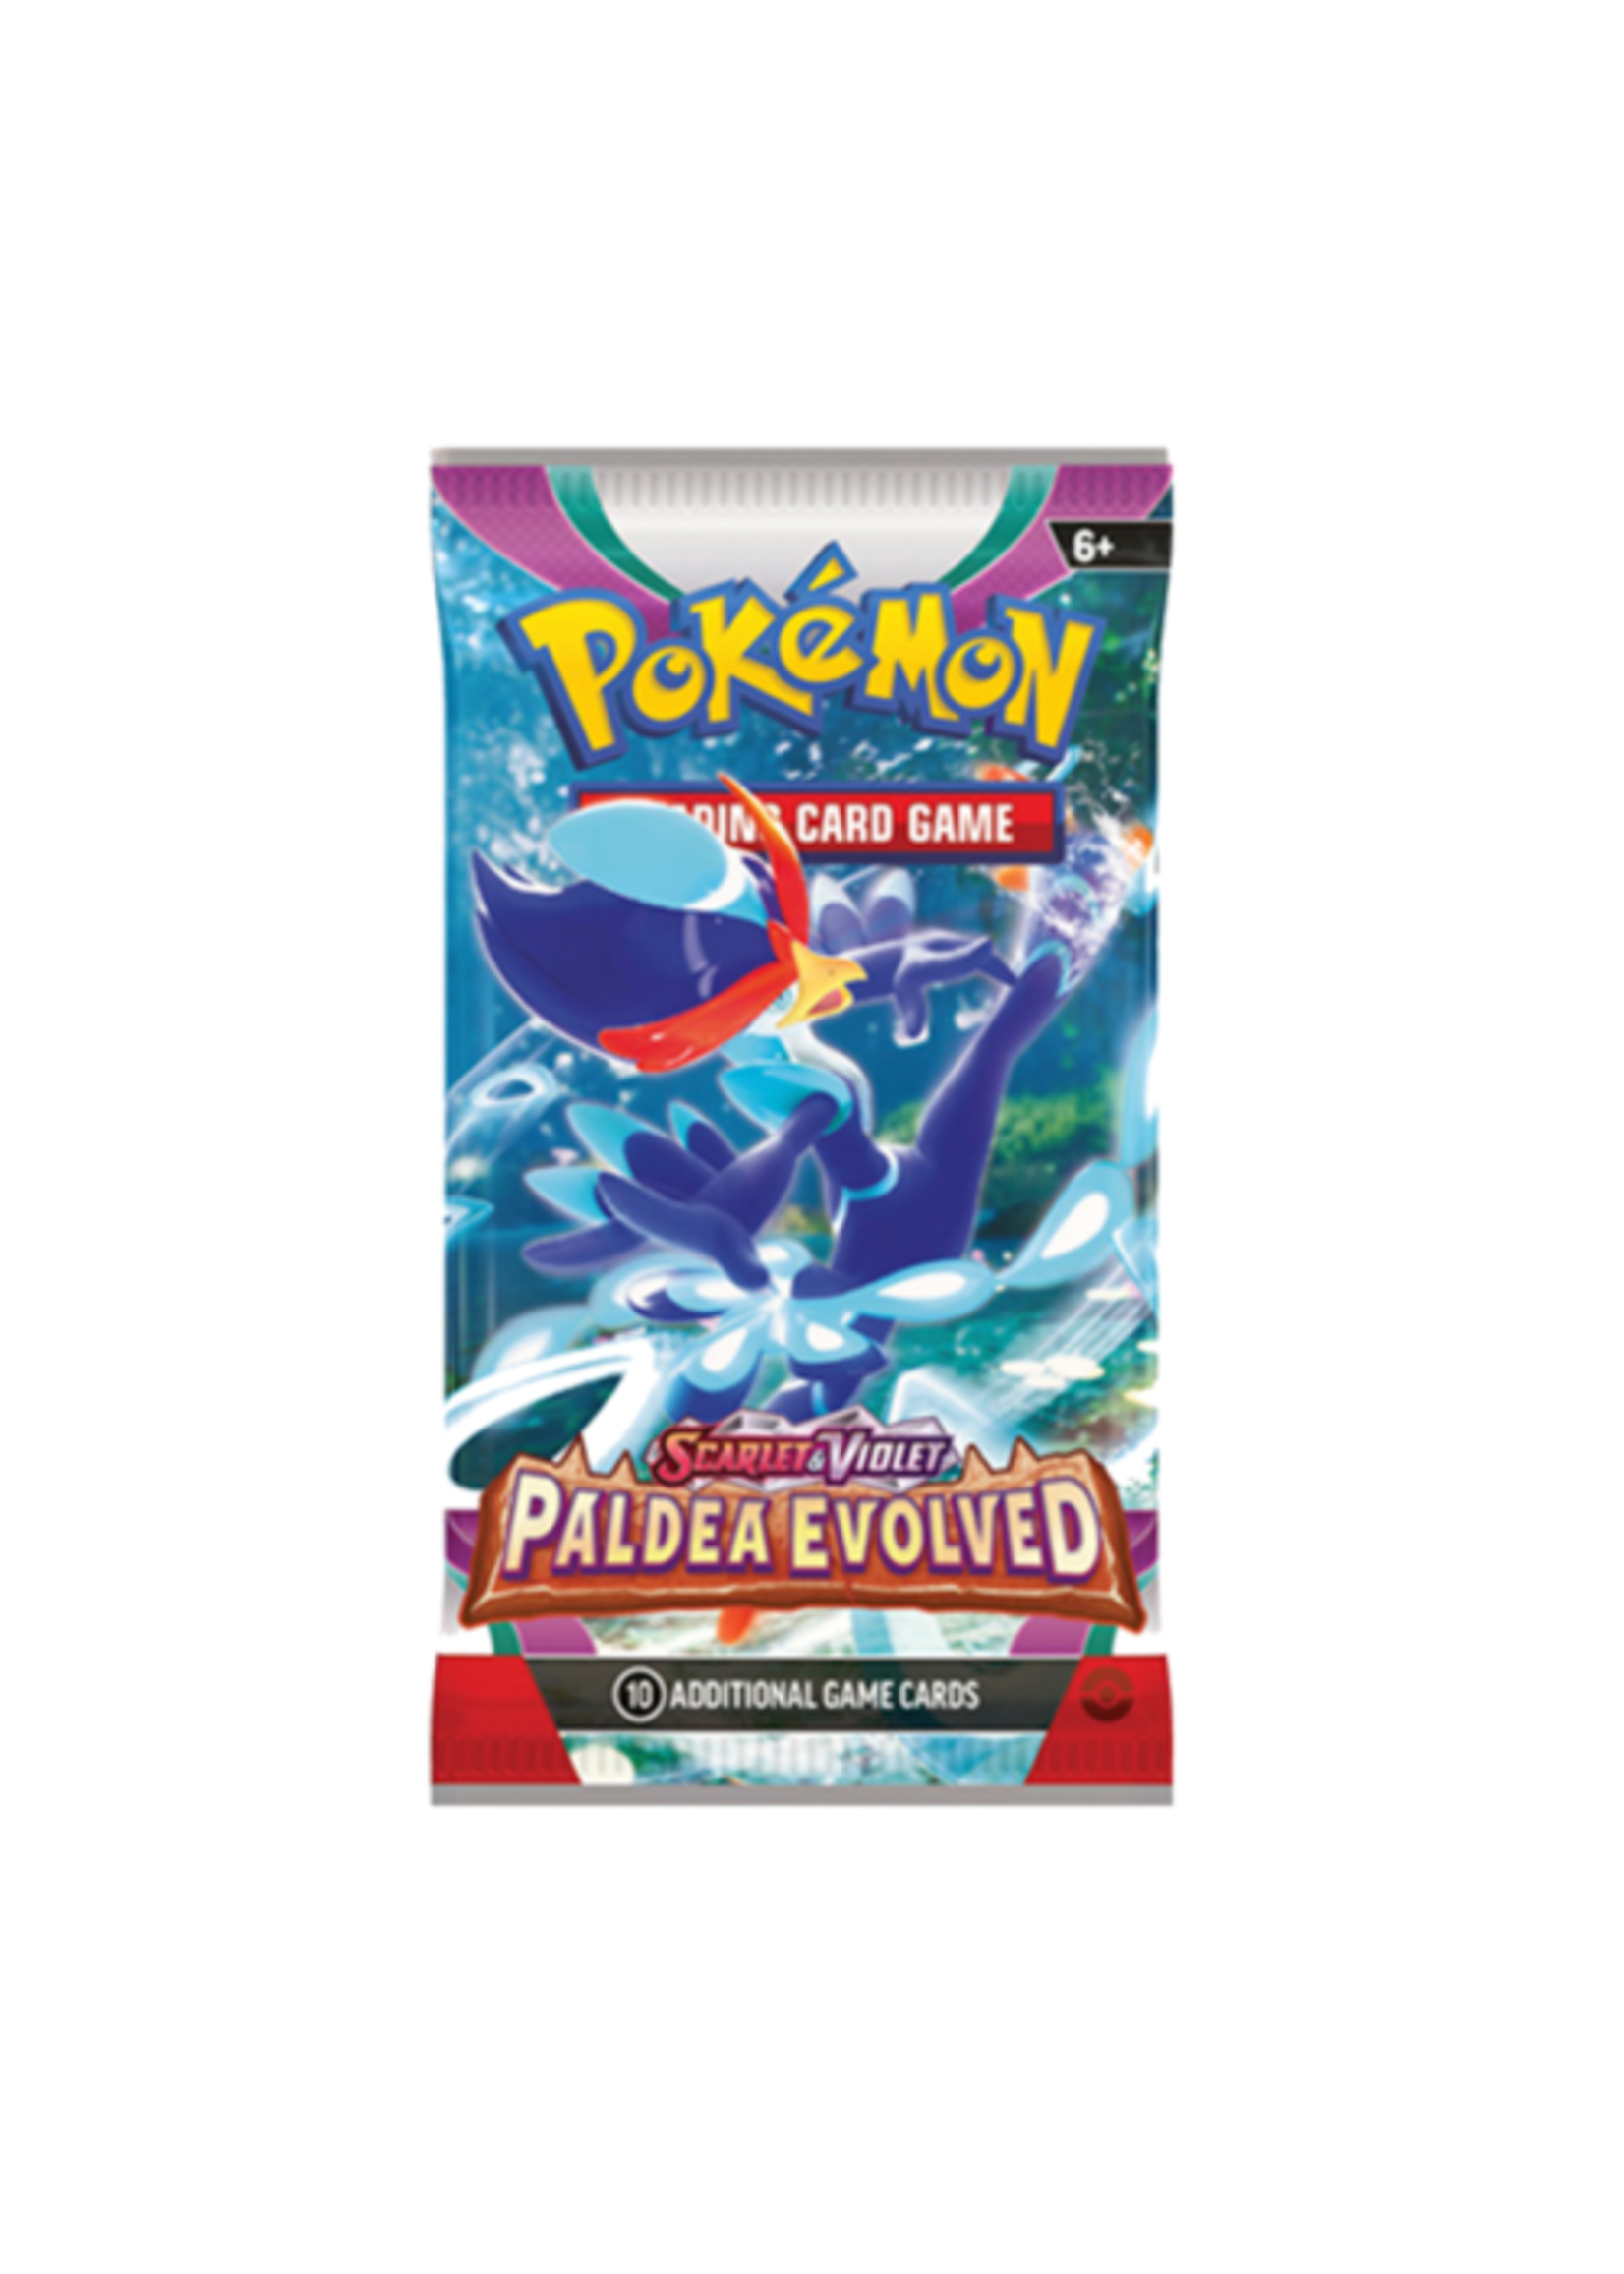 Pokemon Pokemon: Scarlet & Violet - Paldea Evolved pack